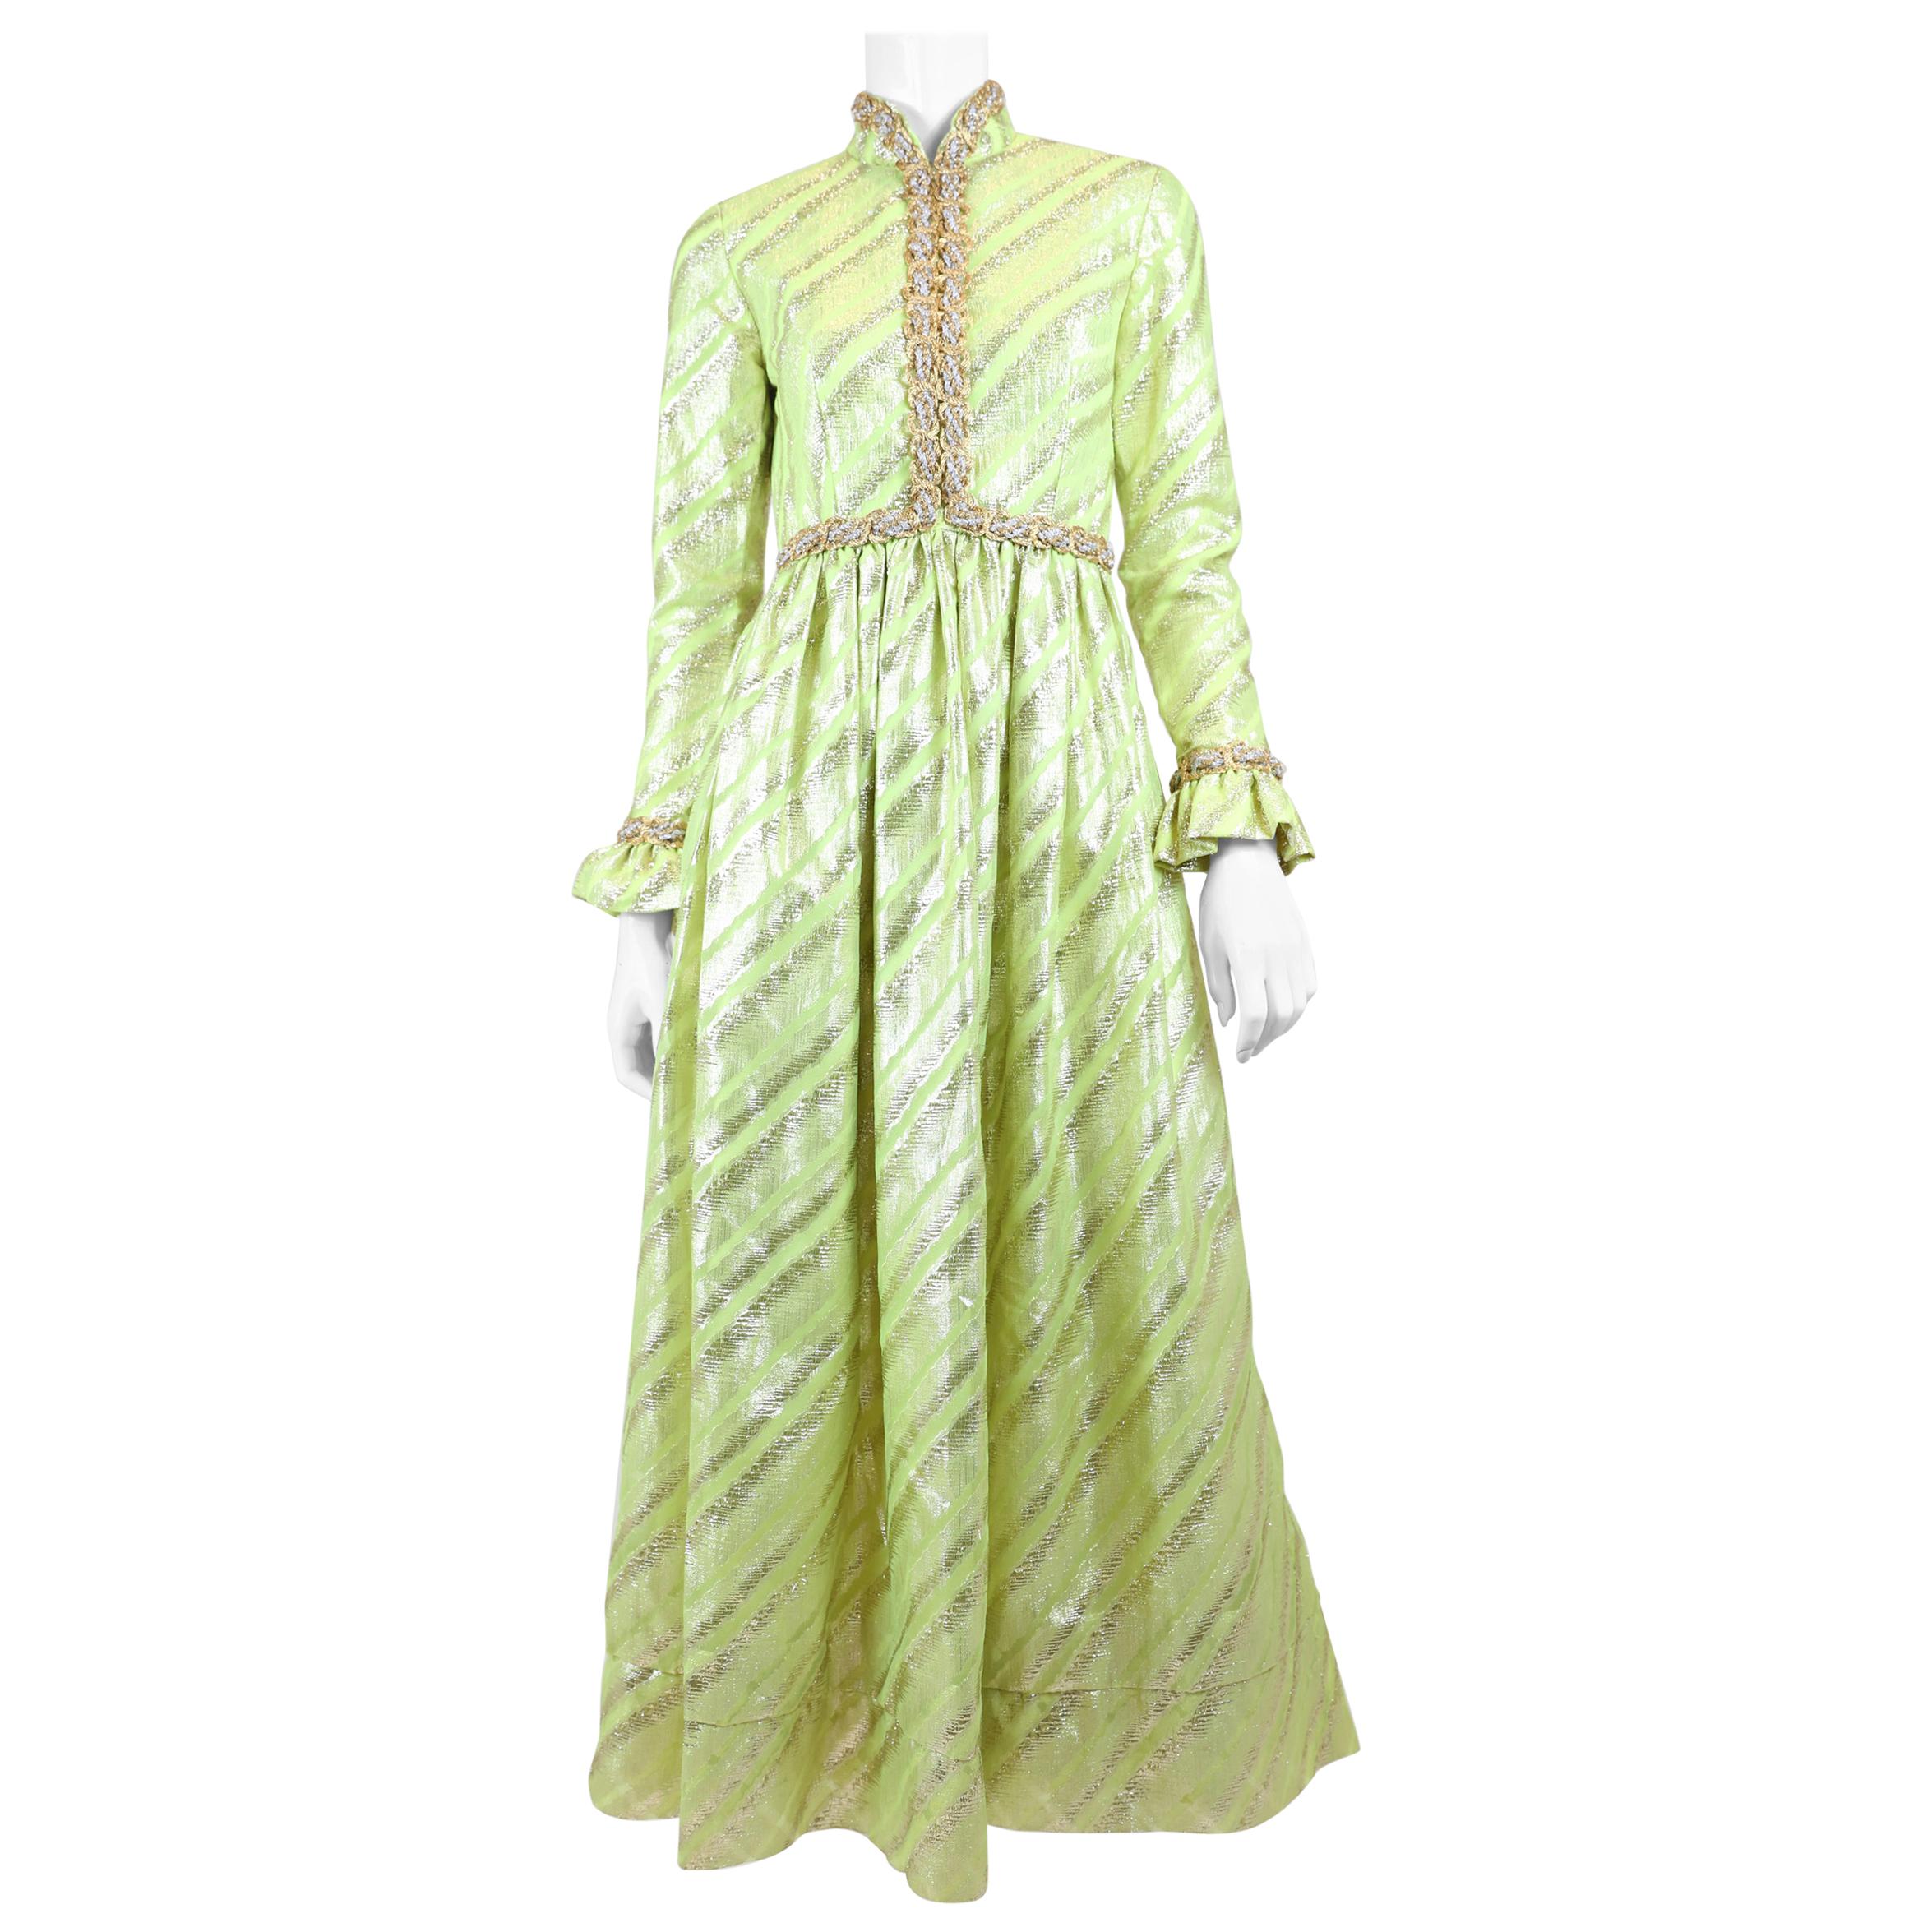 Oscar de la Renta Lime Green Long Gown with Gold Metallic Texture